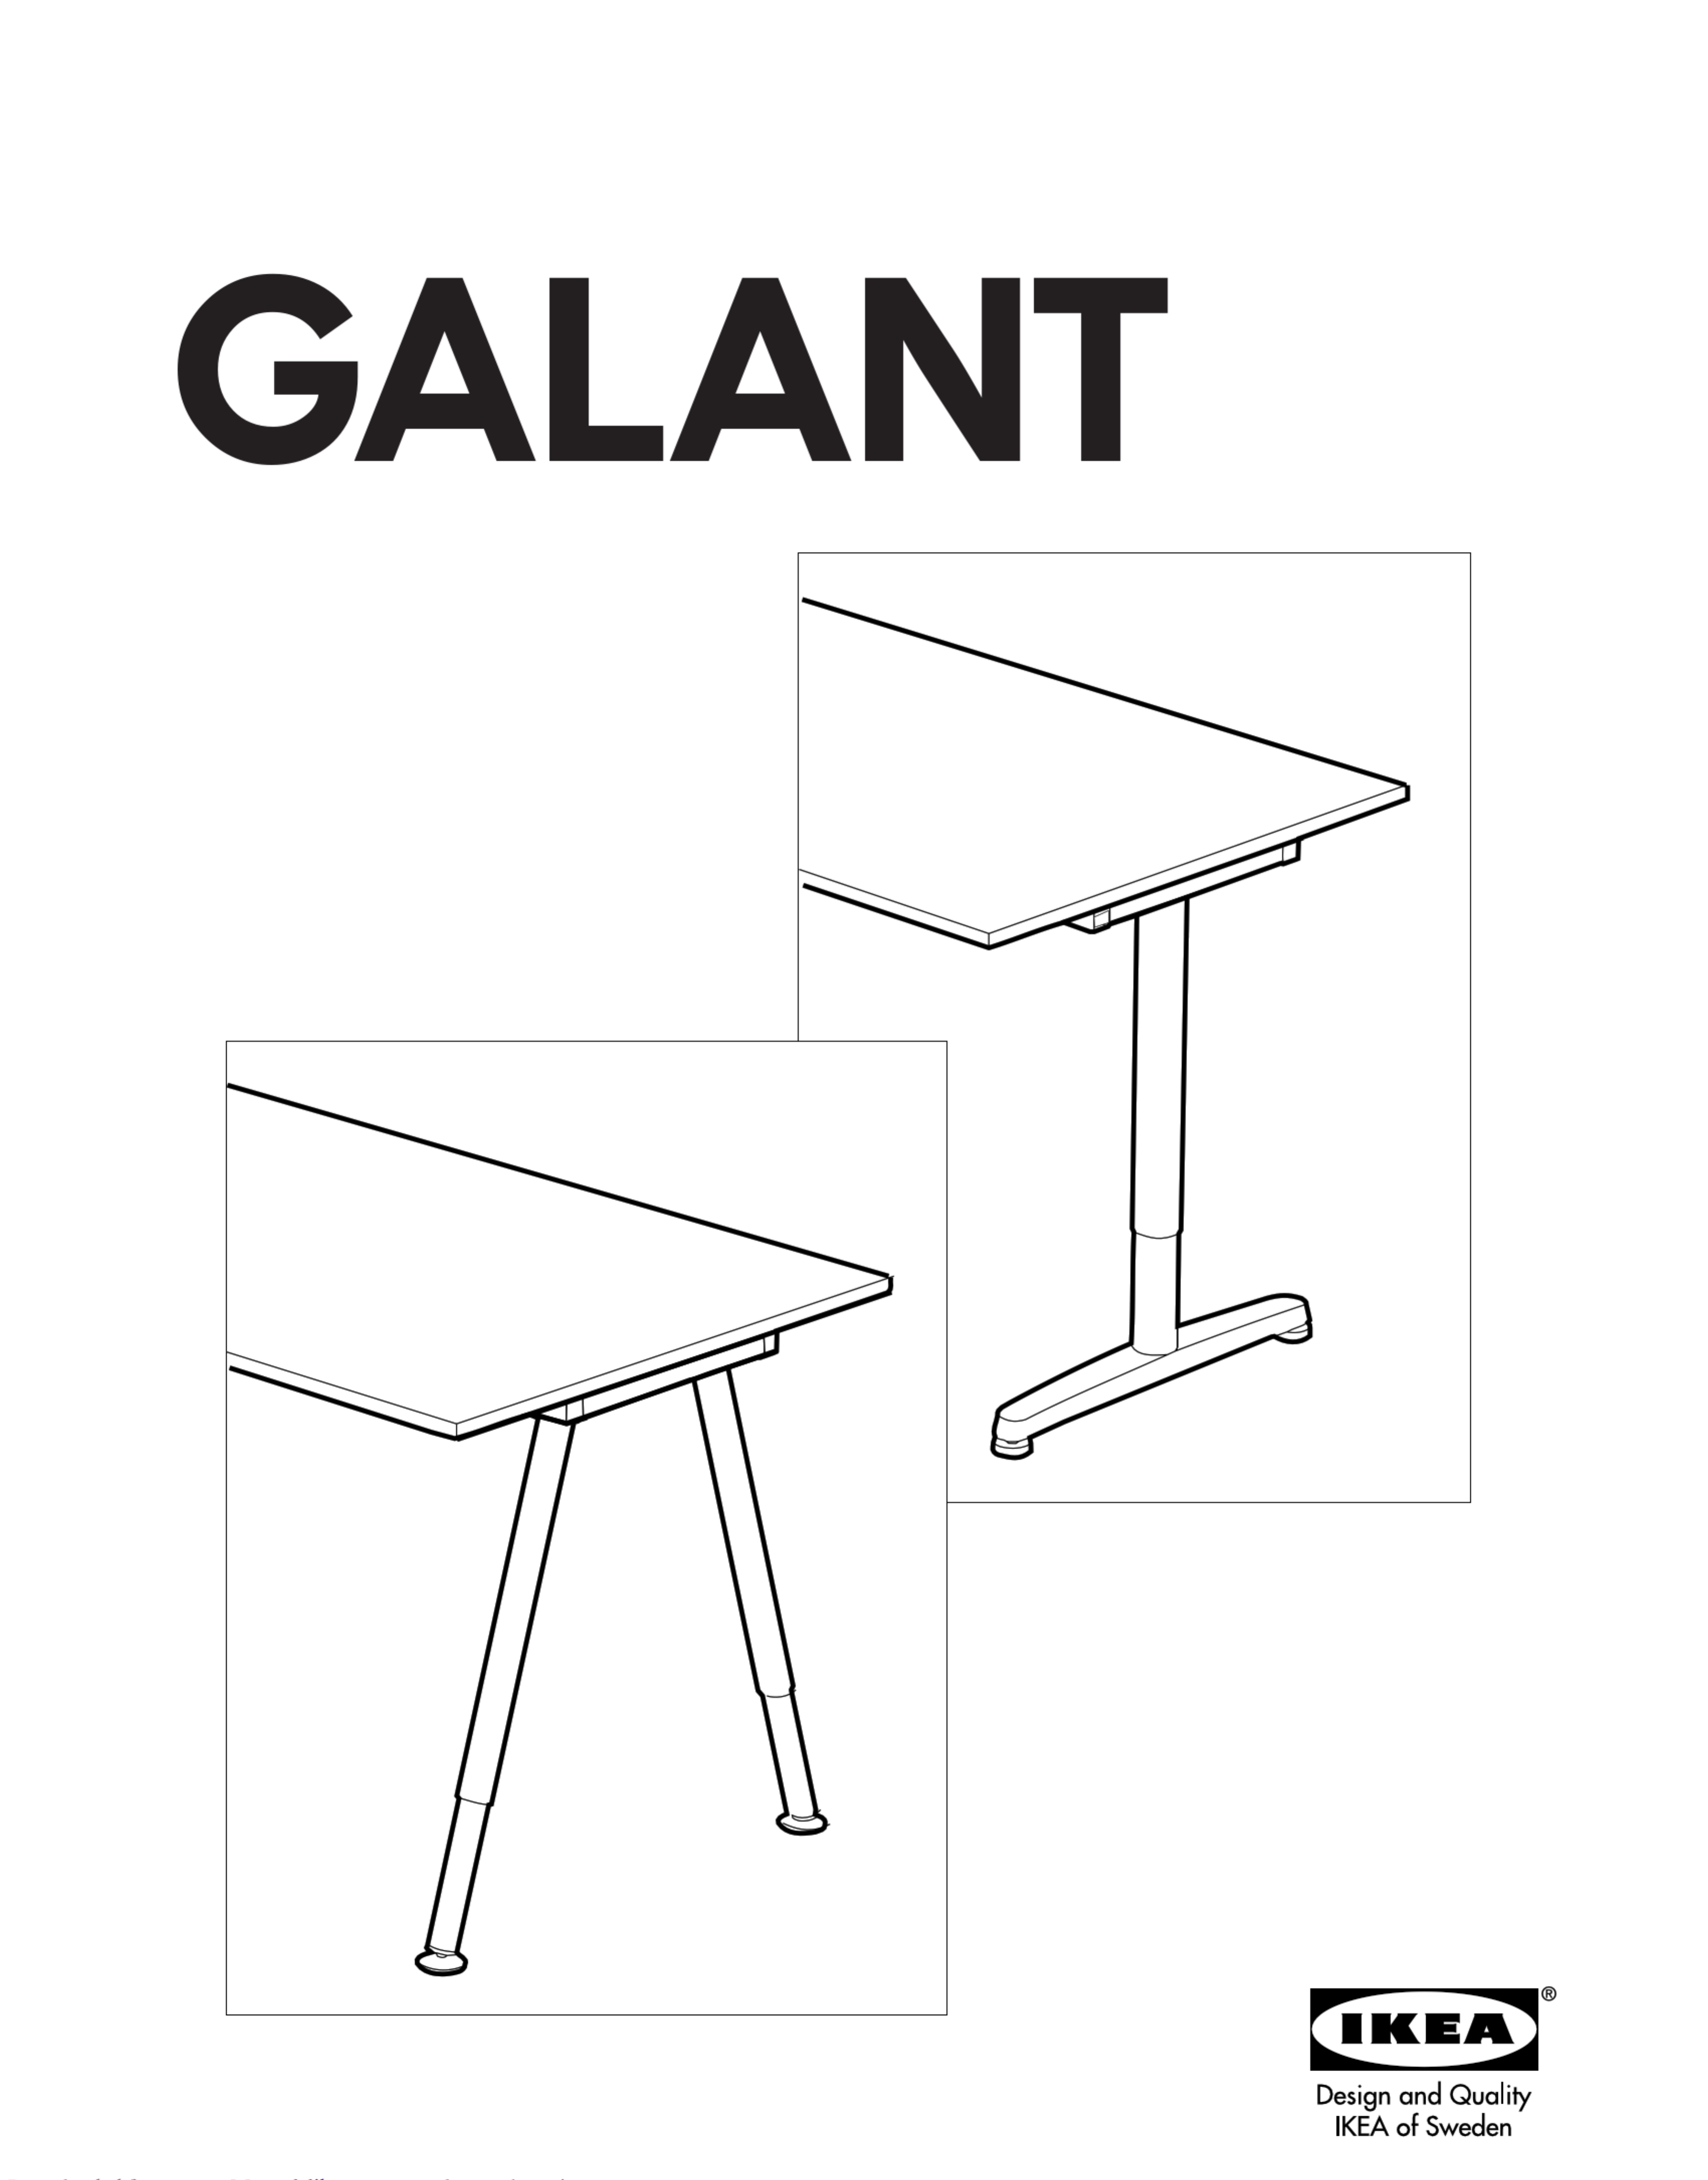 Ikea Galant Frame 63 Instructions Manual 1003134 User